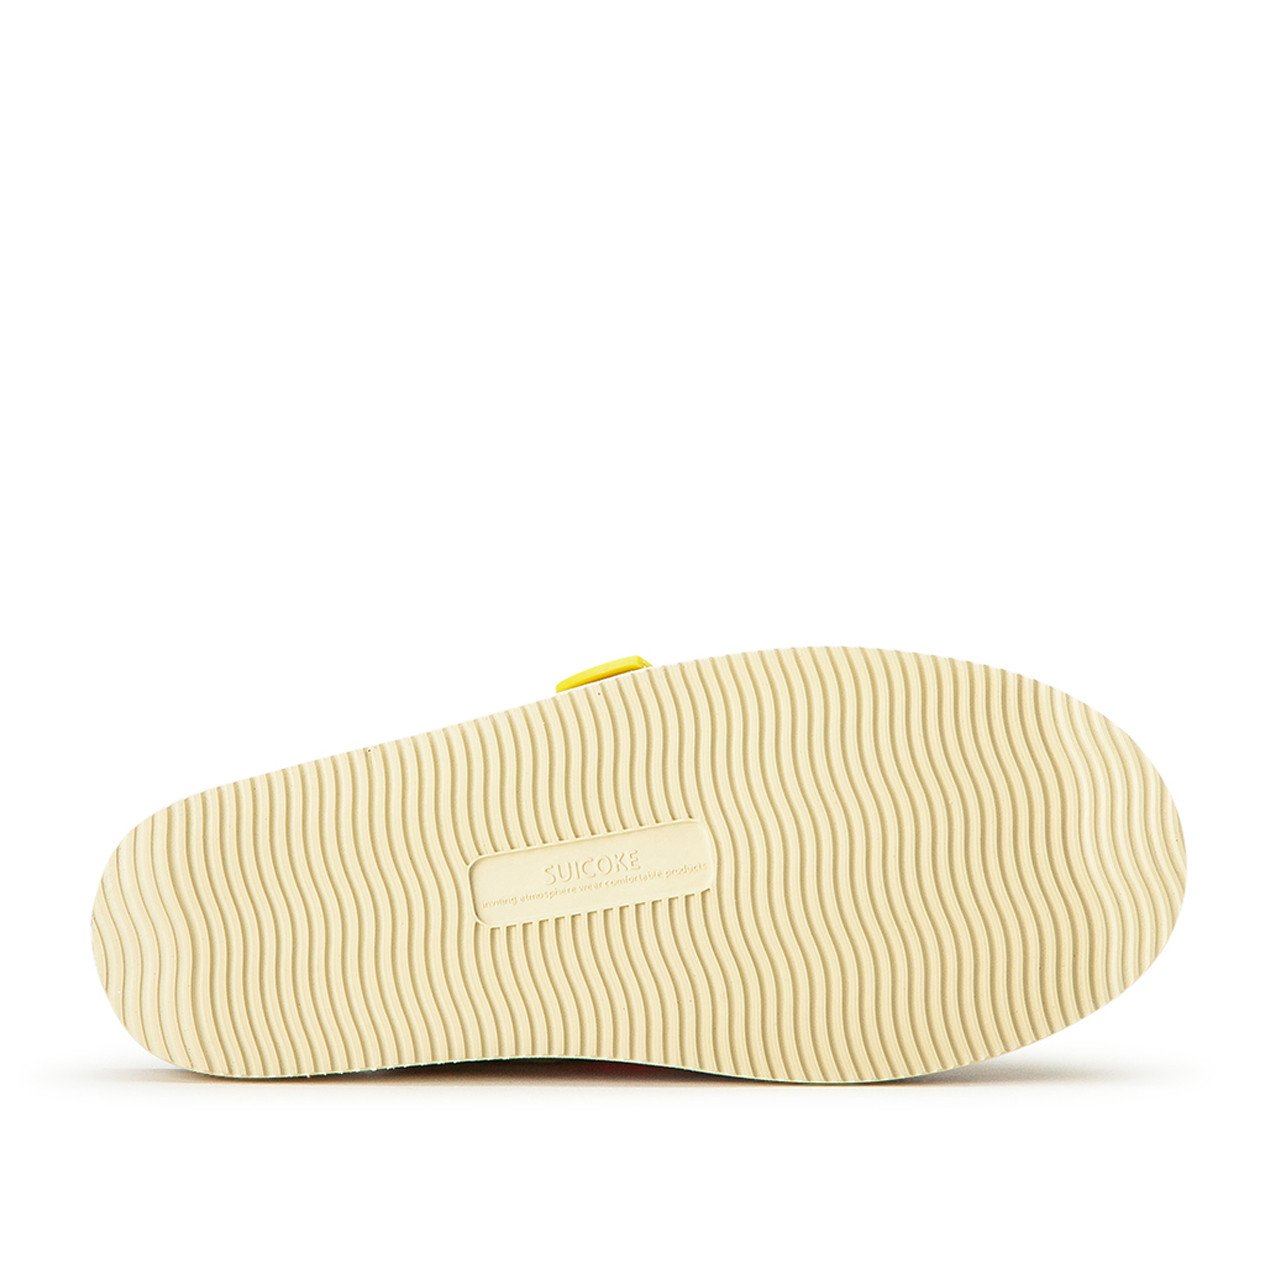 suicoke sandals zavo-mab (beige) - og-073mab-100 - a.plus - Image - 5